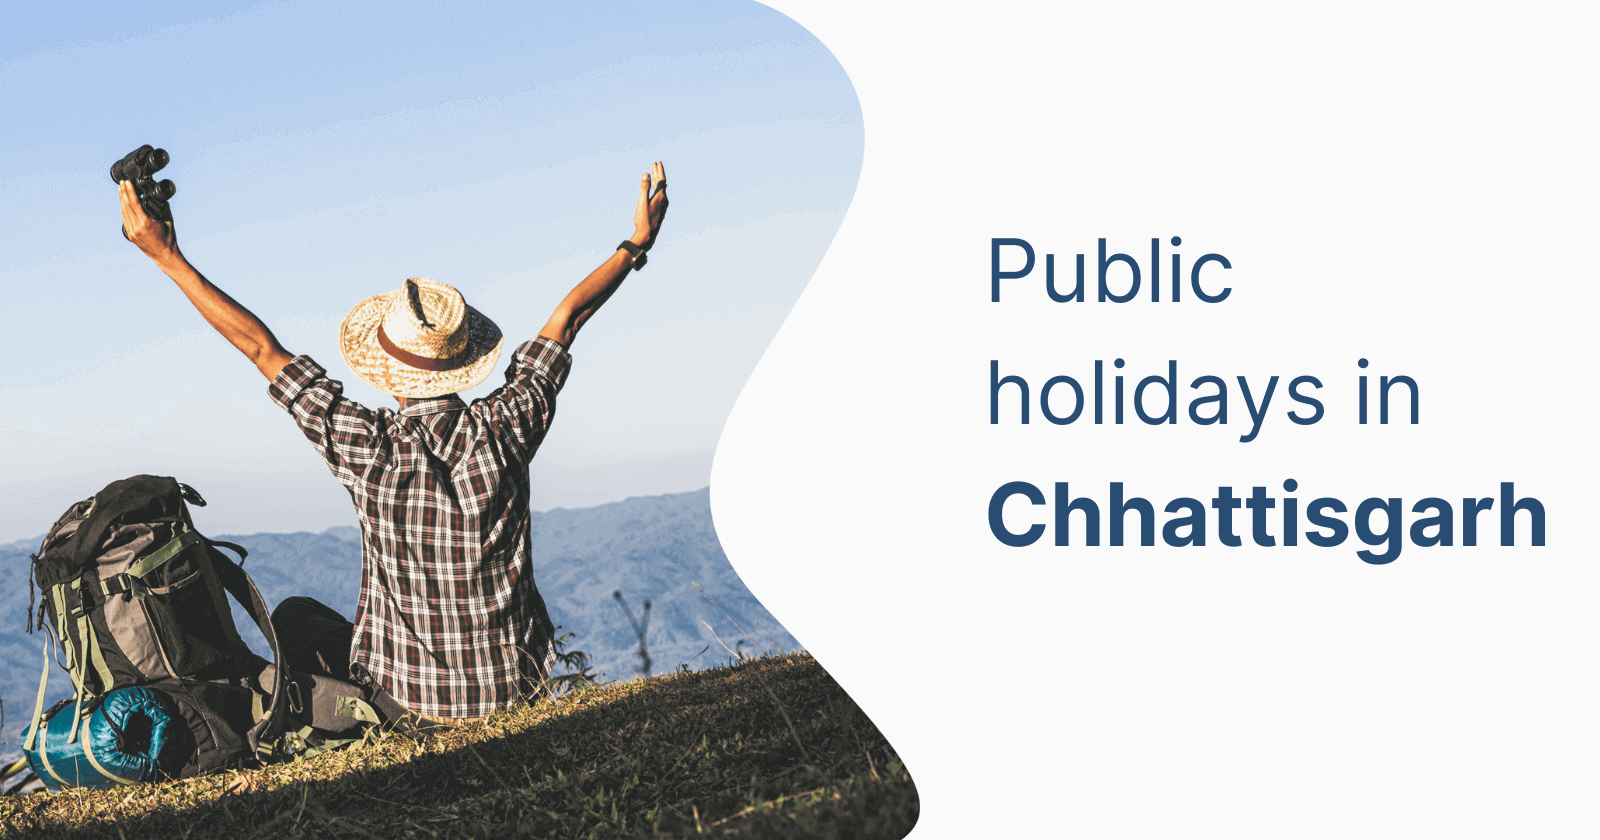 Chhattisgarh Holidays: List of Public Holidays in Chhattisgarh in 2023